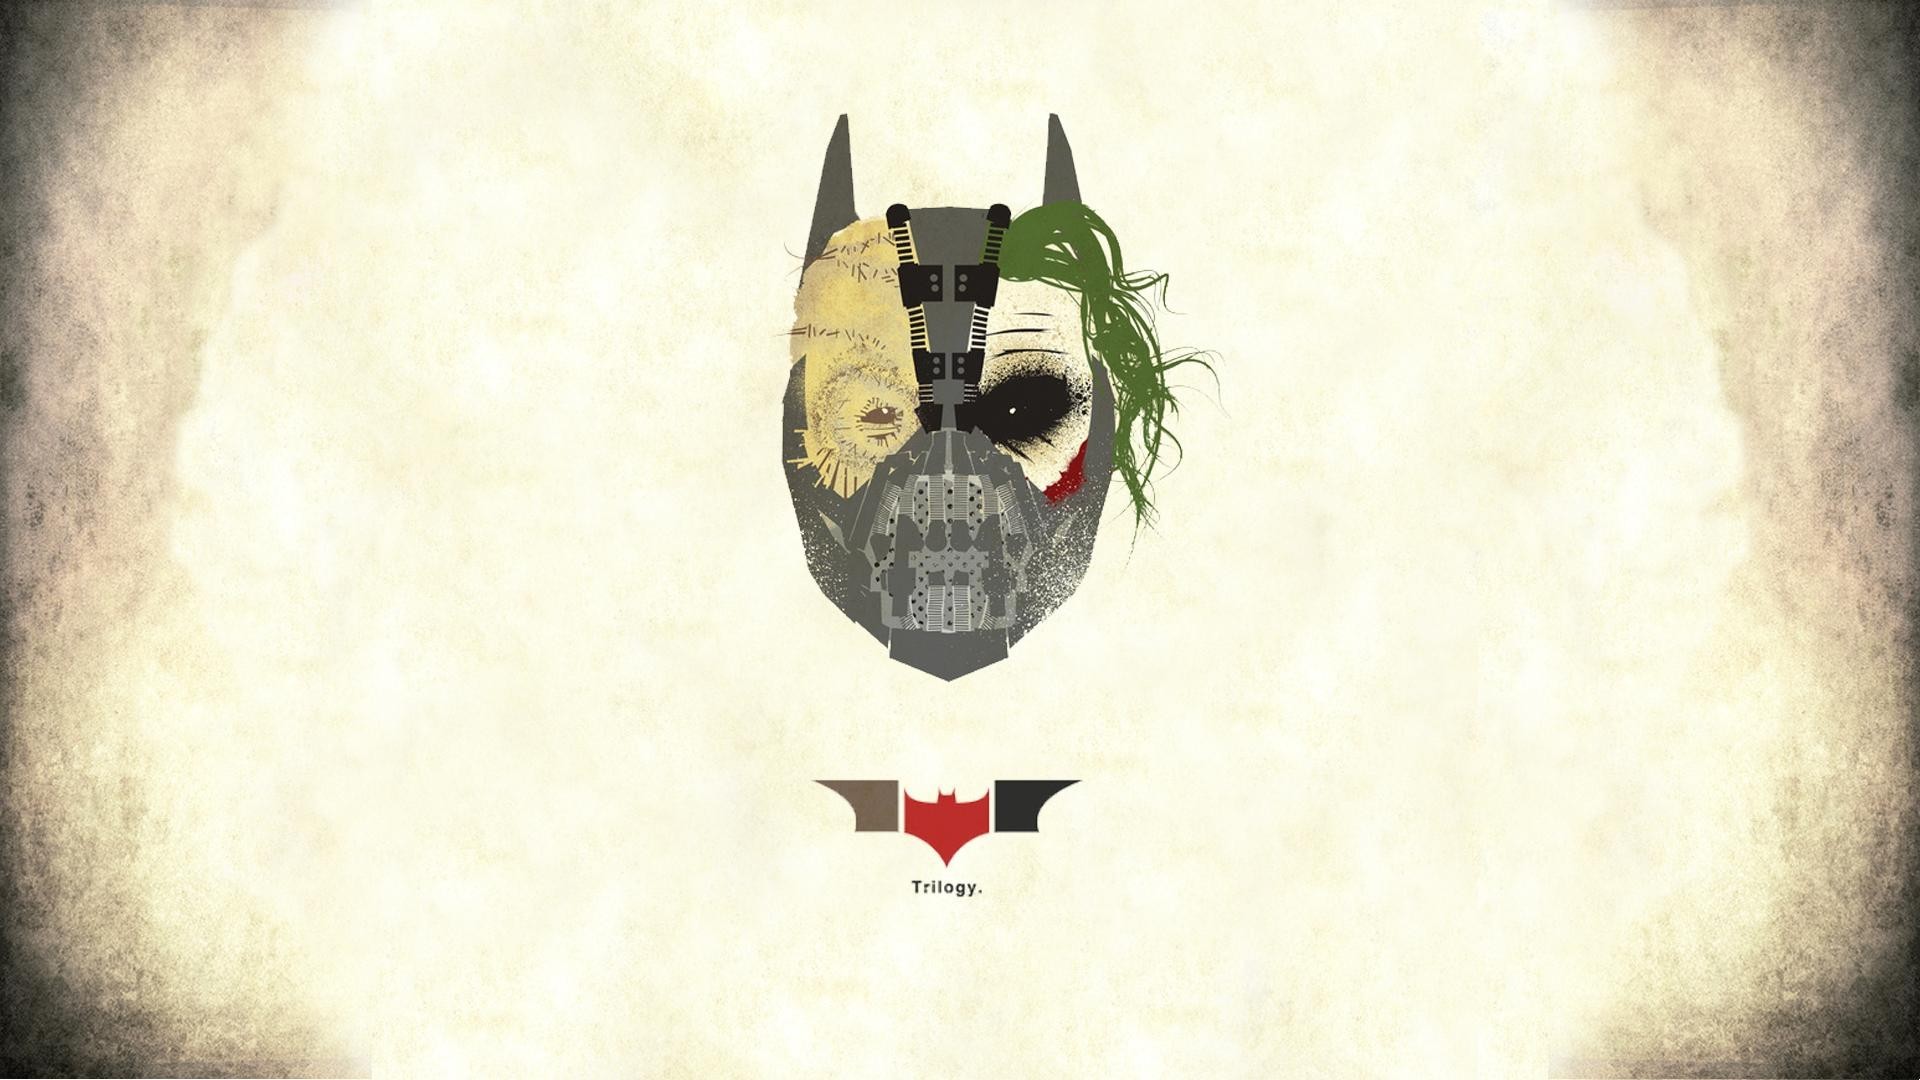 General 1920x1080 Batman logo Batman Bane mask The Dark Knight Rises movie characters superhero DC Comics Warner Brothers Christopher Nolan